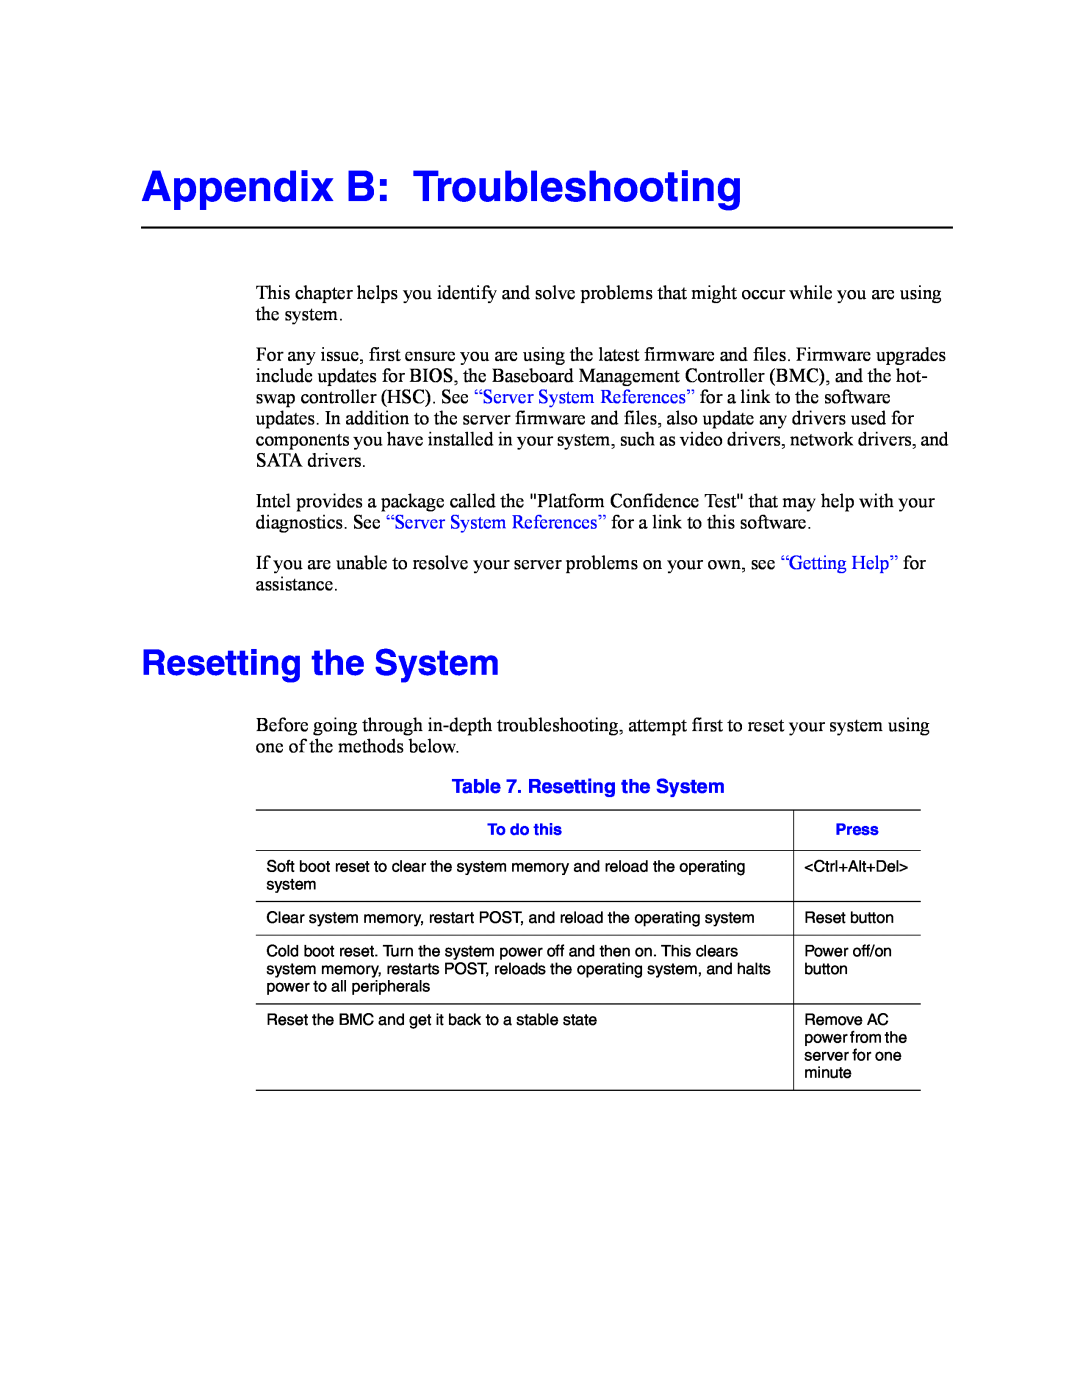 Intel SR2500AL manual Appendix B Troubleshooting, Resetting the System 